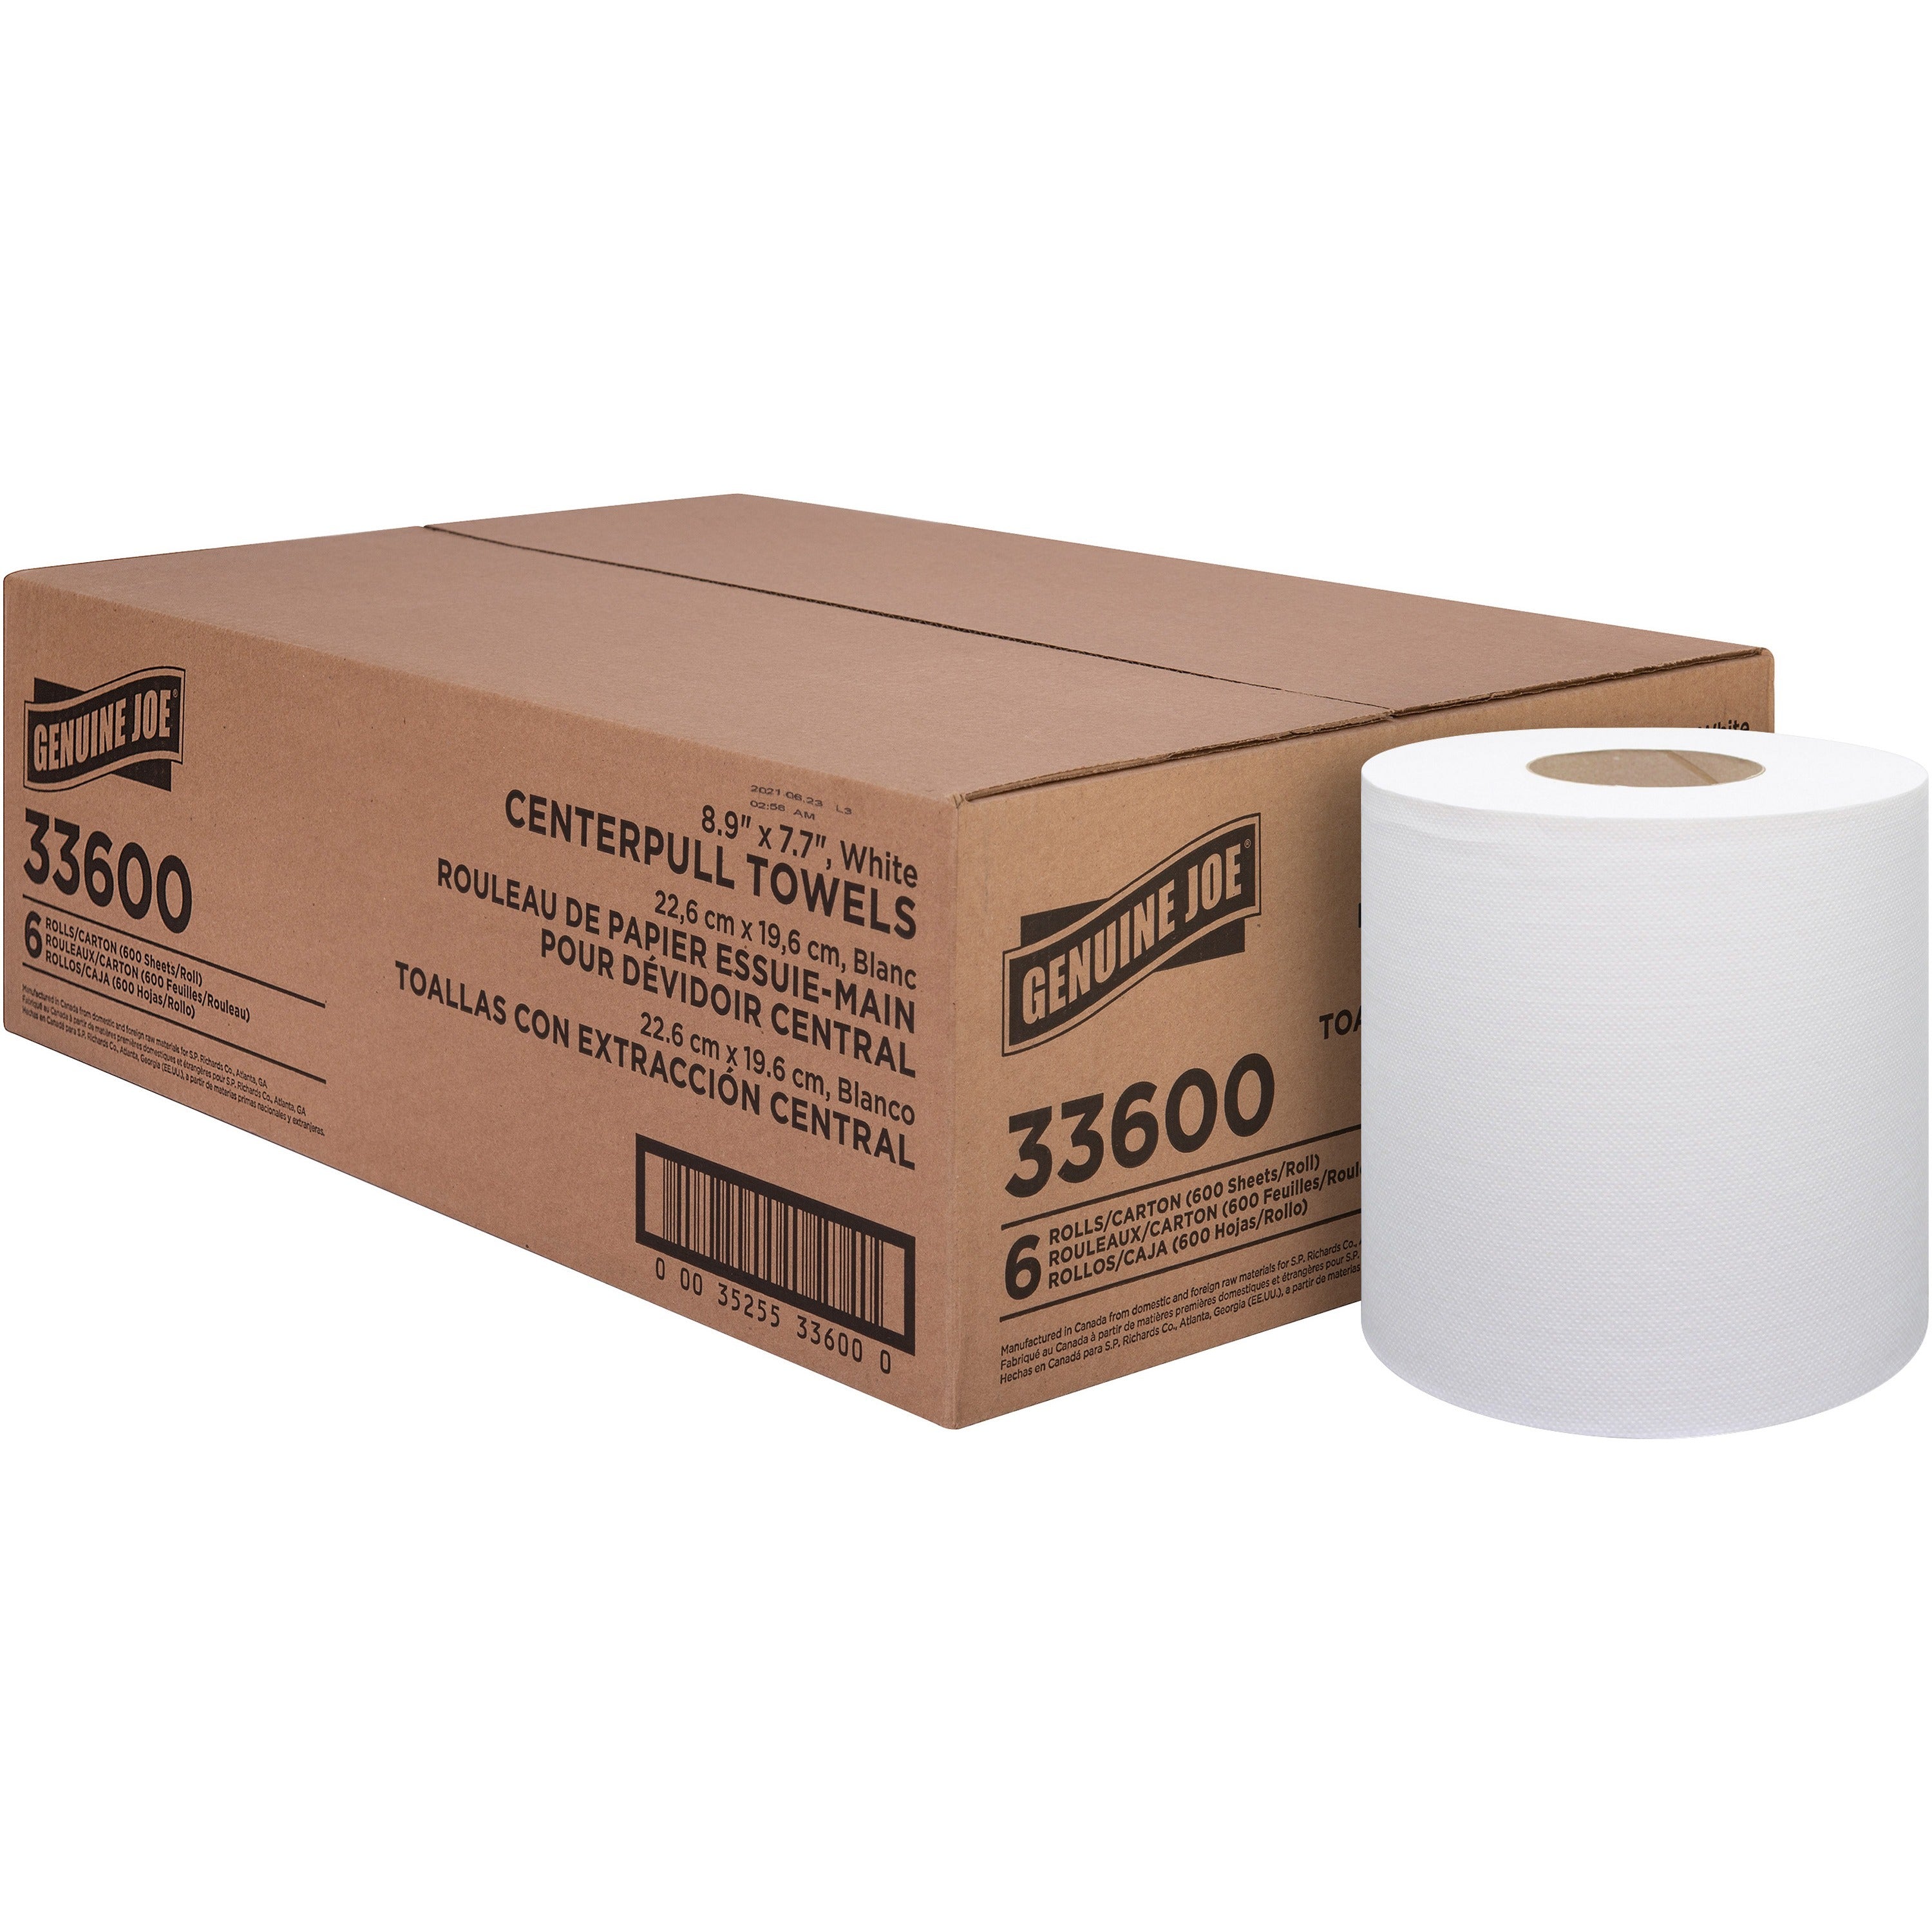 genuine-joe-centerpull-towel-rolls-600-sheets-roll-white-virgin-fiber-center-pull-soft-absorbent-for-washroom-6-carton_gjo33600 - 1